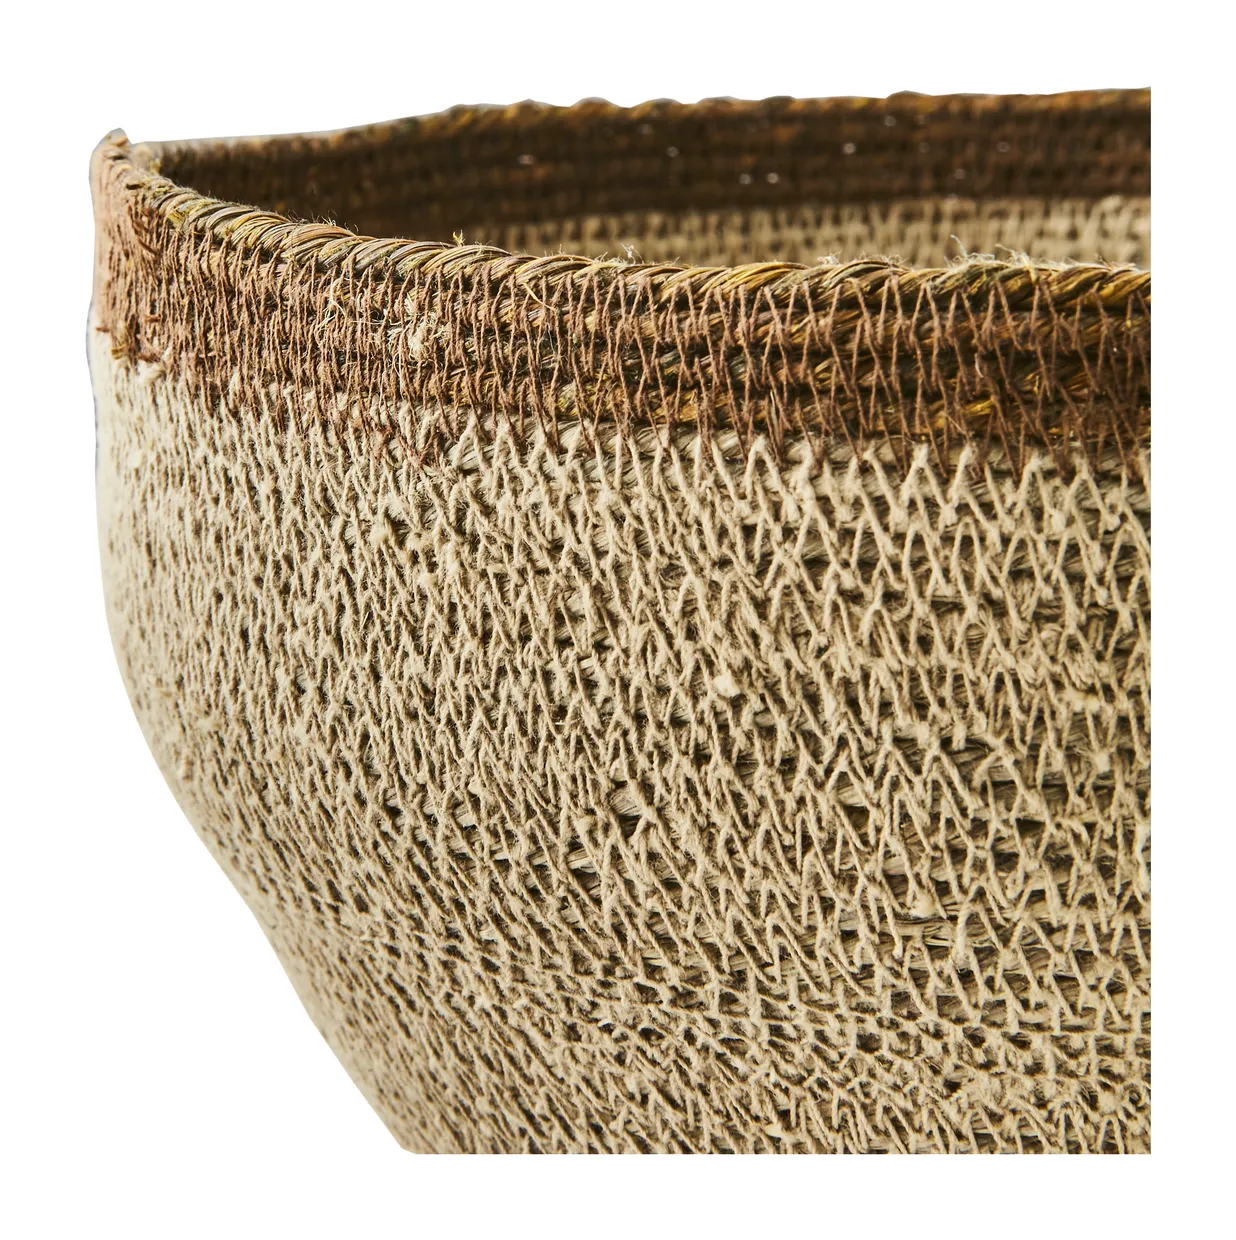 Basket Seagrass Jute Mand Color Neutraal Nature Bruin